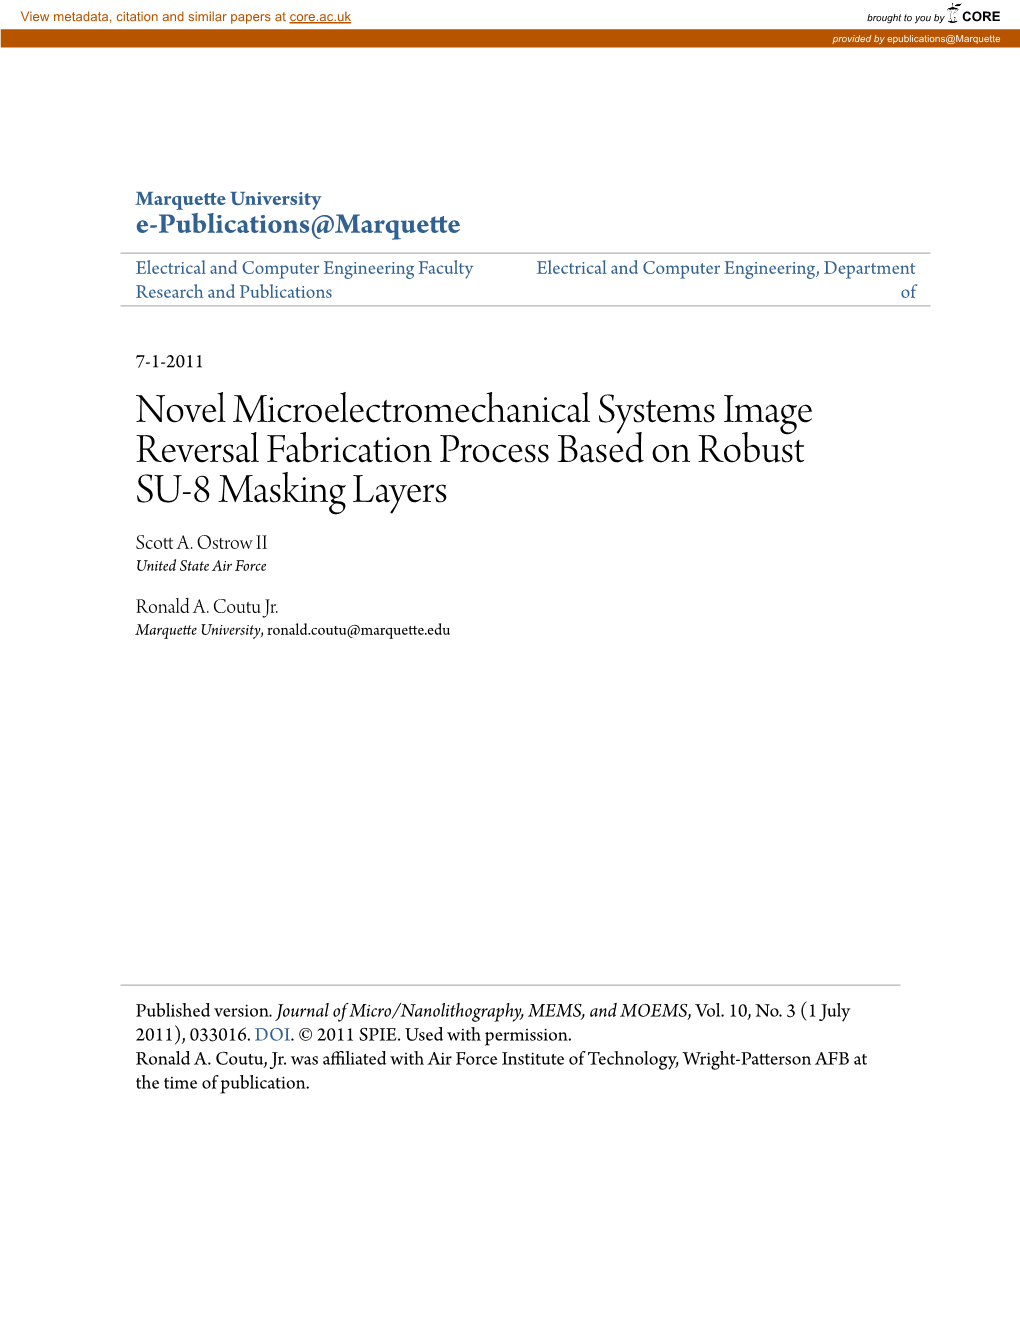 Novel Microelectromechanical Systems Image Reversal Fabrication Process Based on Robust SU-8 Masking Layers Scott A